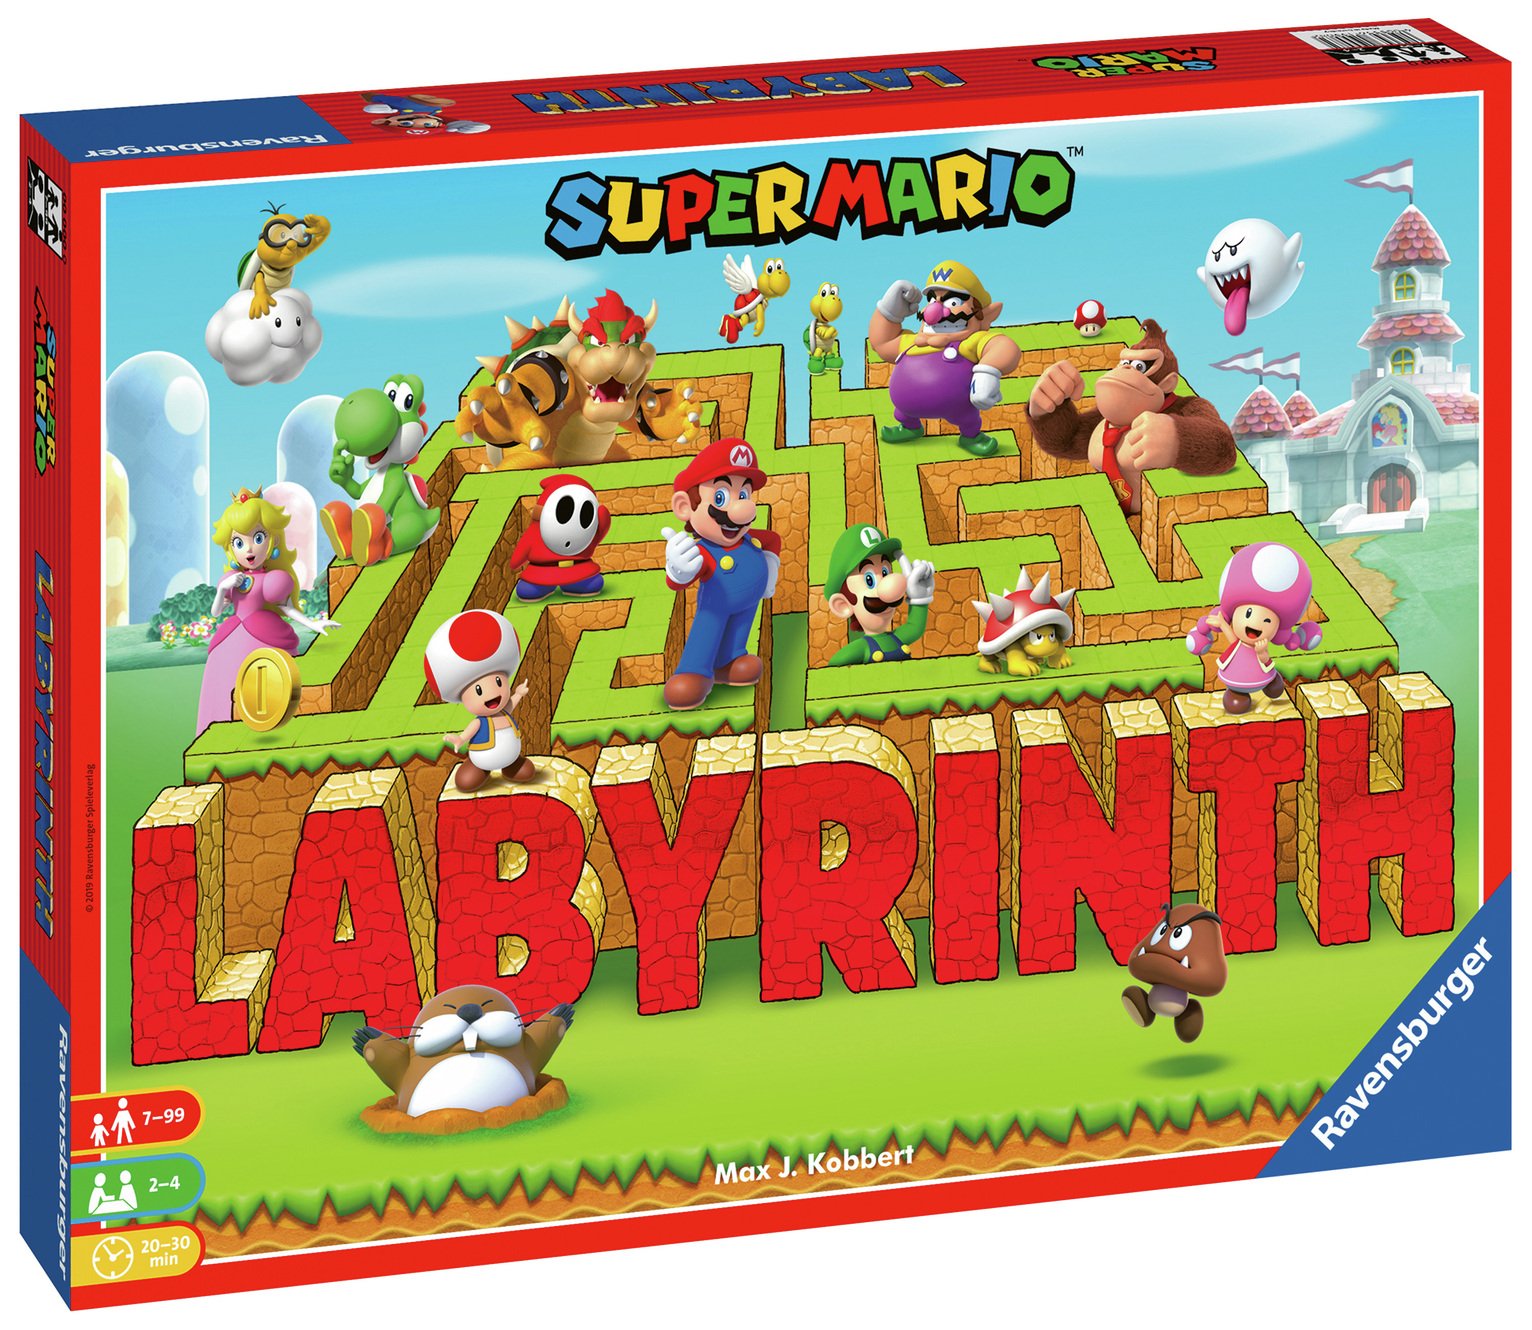 Super Mario Labyrinth Game